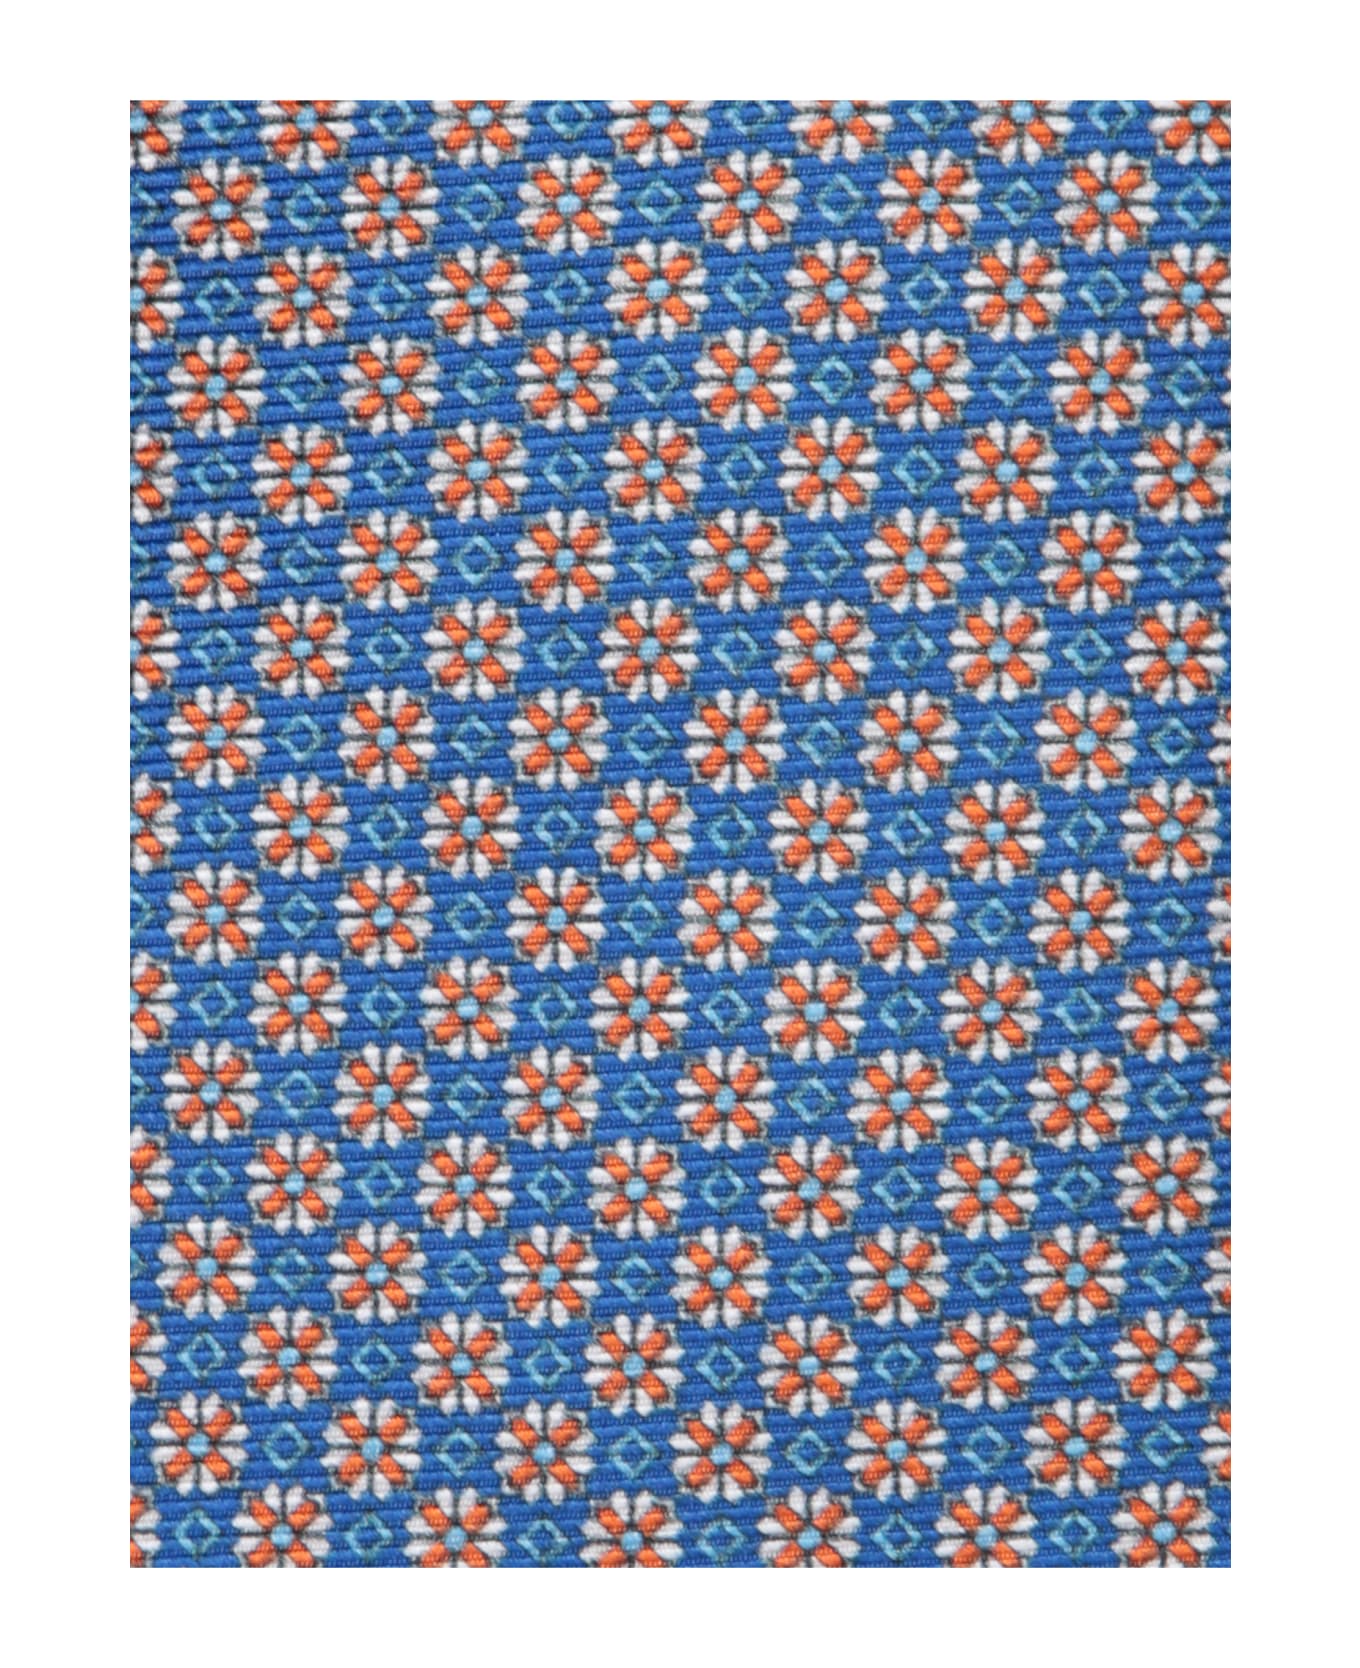 Kiton Patterned Tie Blue/green/orange - Blue ネクタイ